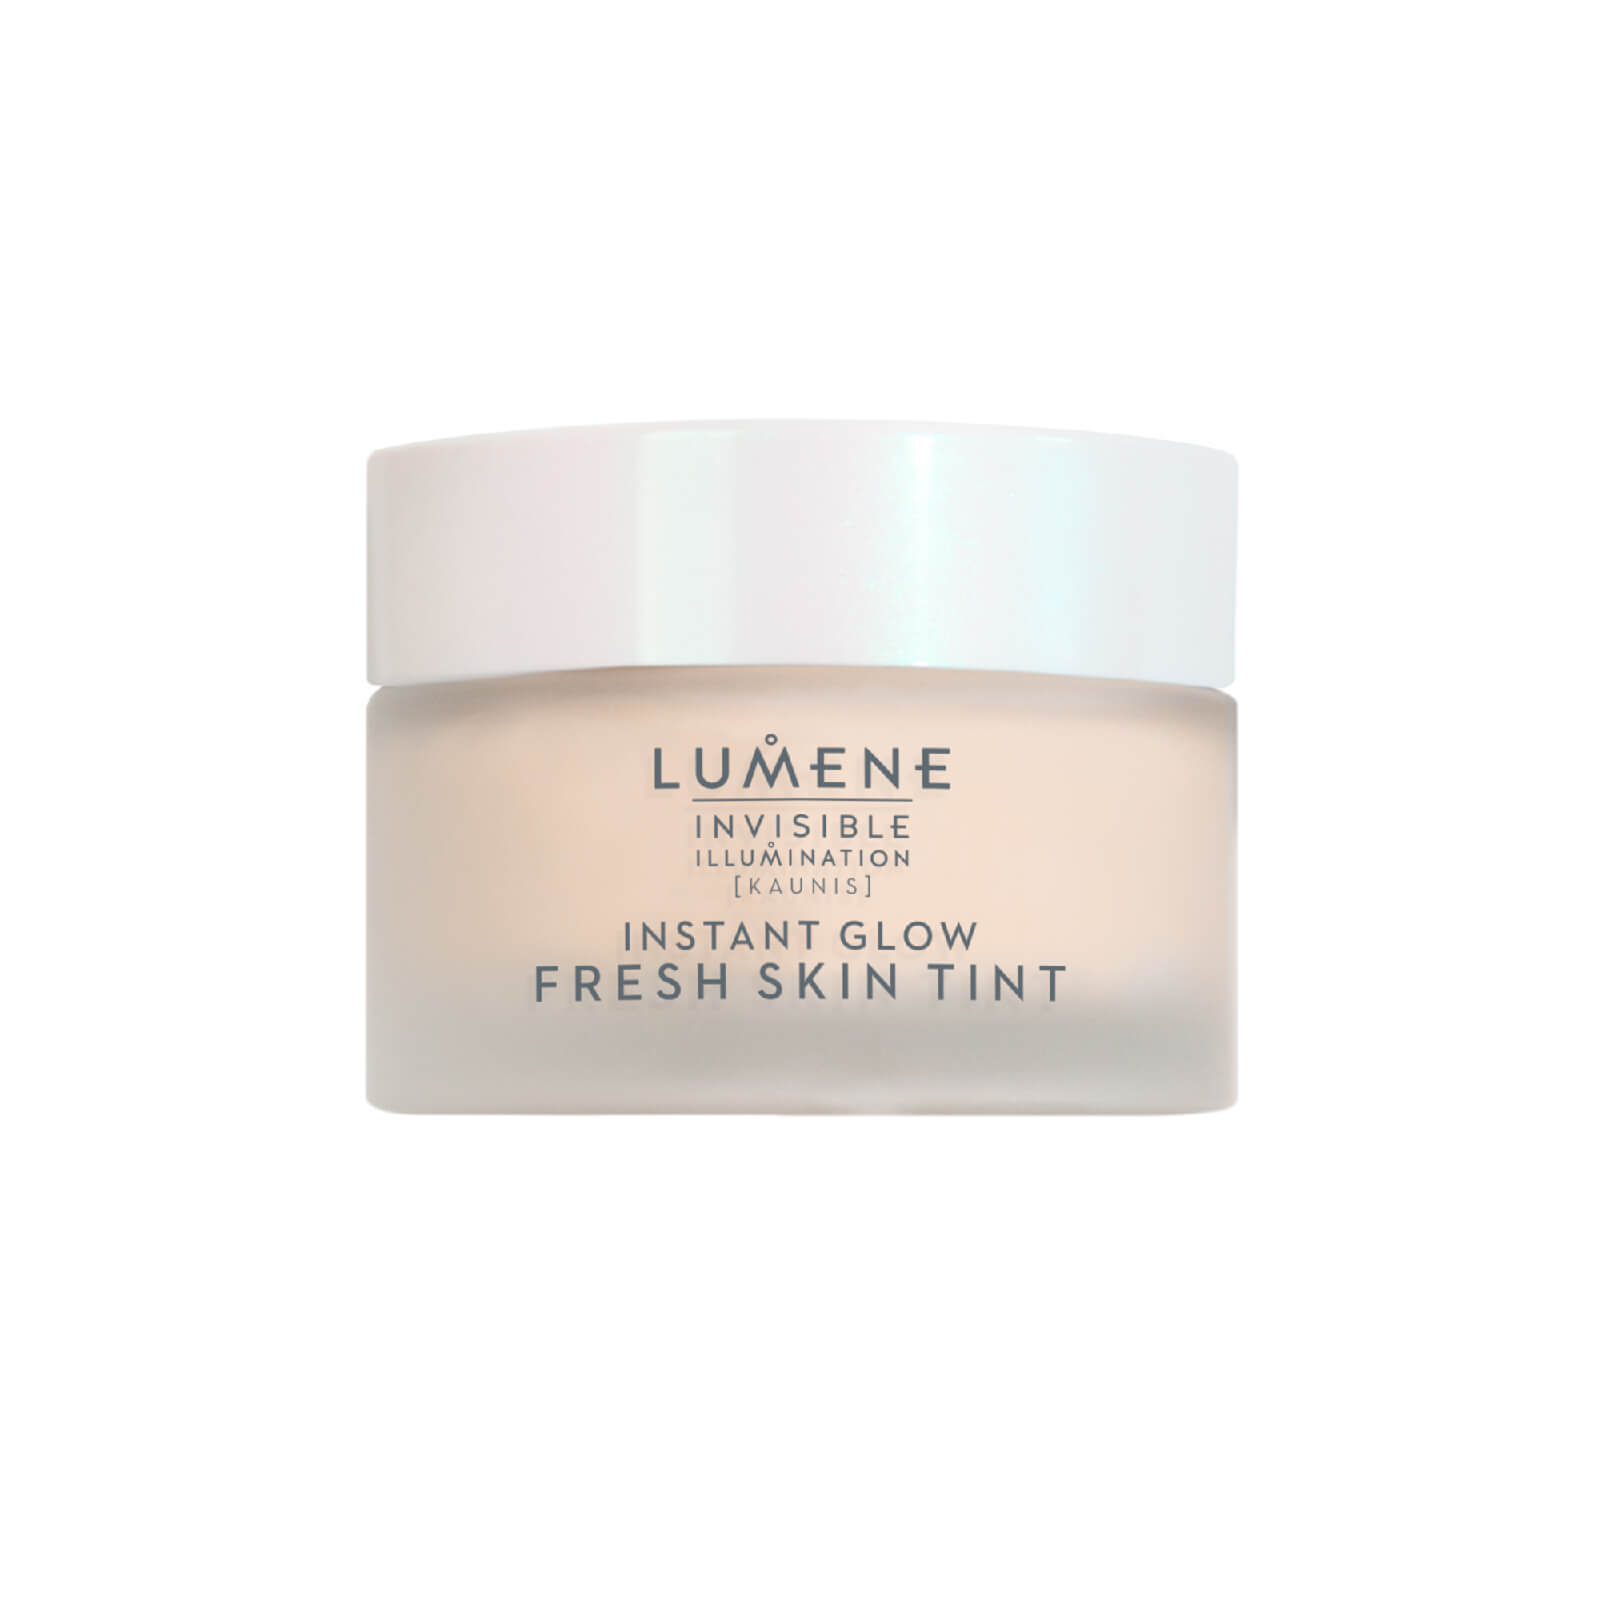 Lumene Invisible Illumination [KAUNIS] Instant Glow Fresh Skin Tint Universal 30ml (Various Shades) - Medium